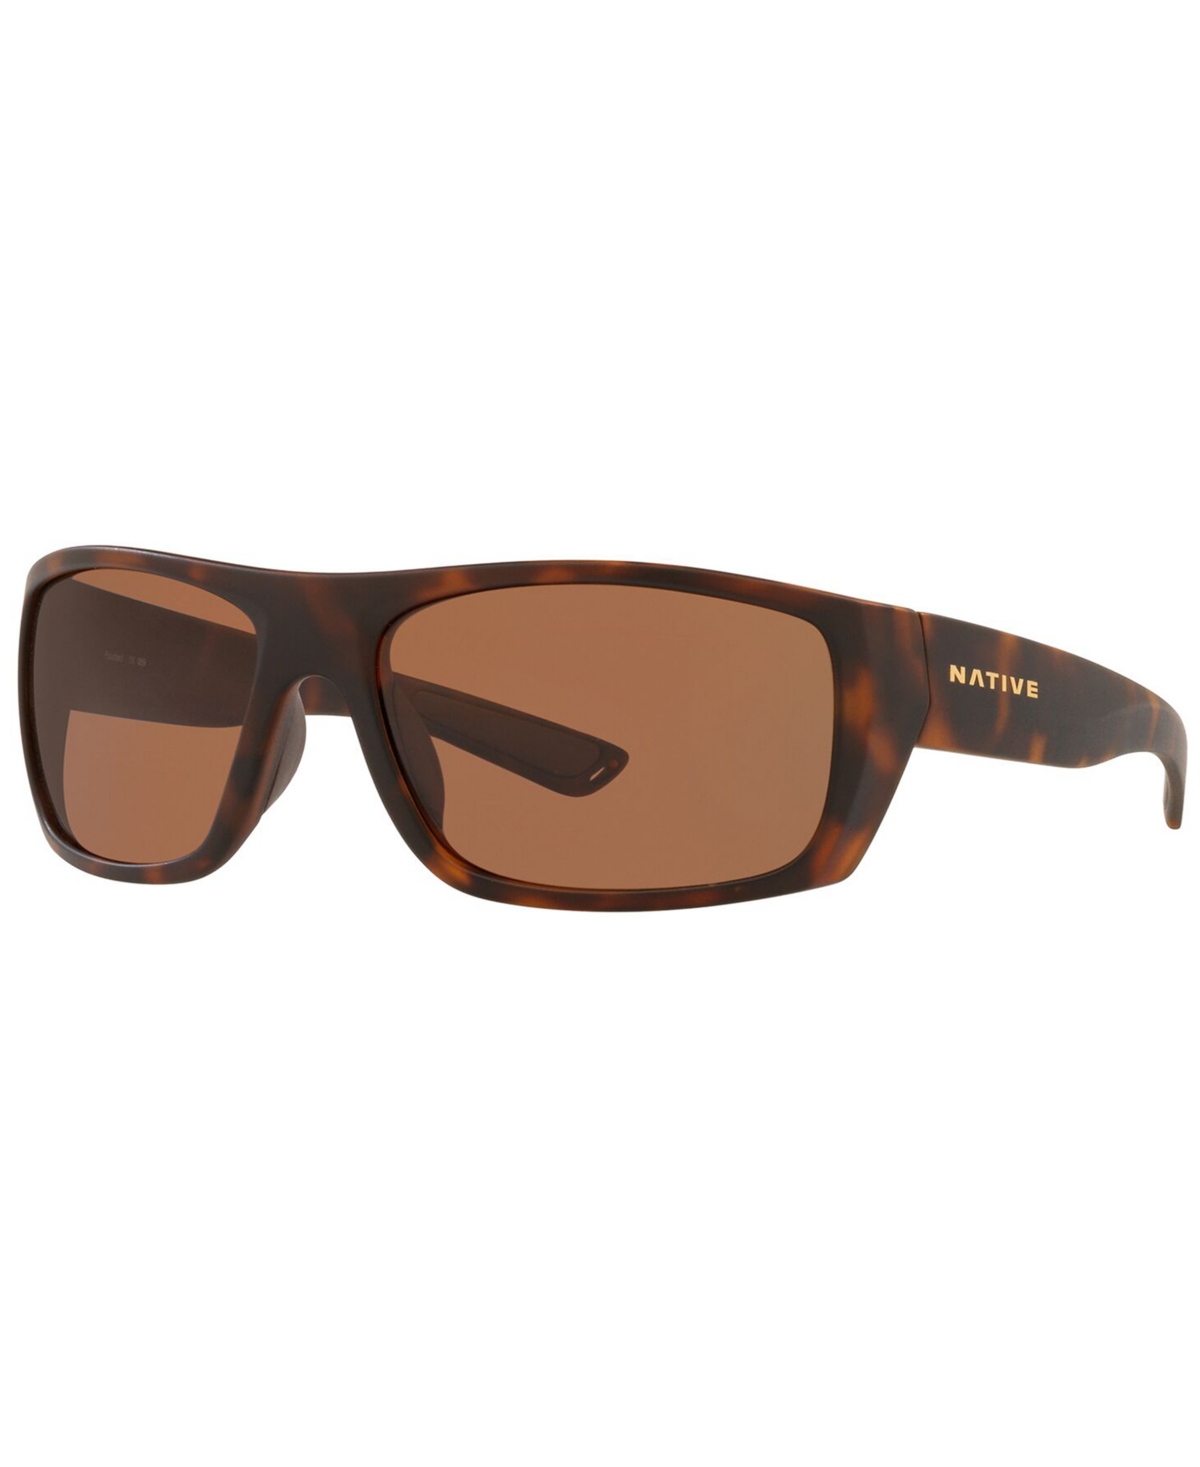 Native Eyewear Native Men's Polarized Sunglasses, Xd0063 62 In Desert Tortoise,brown